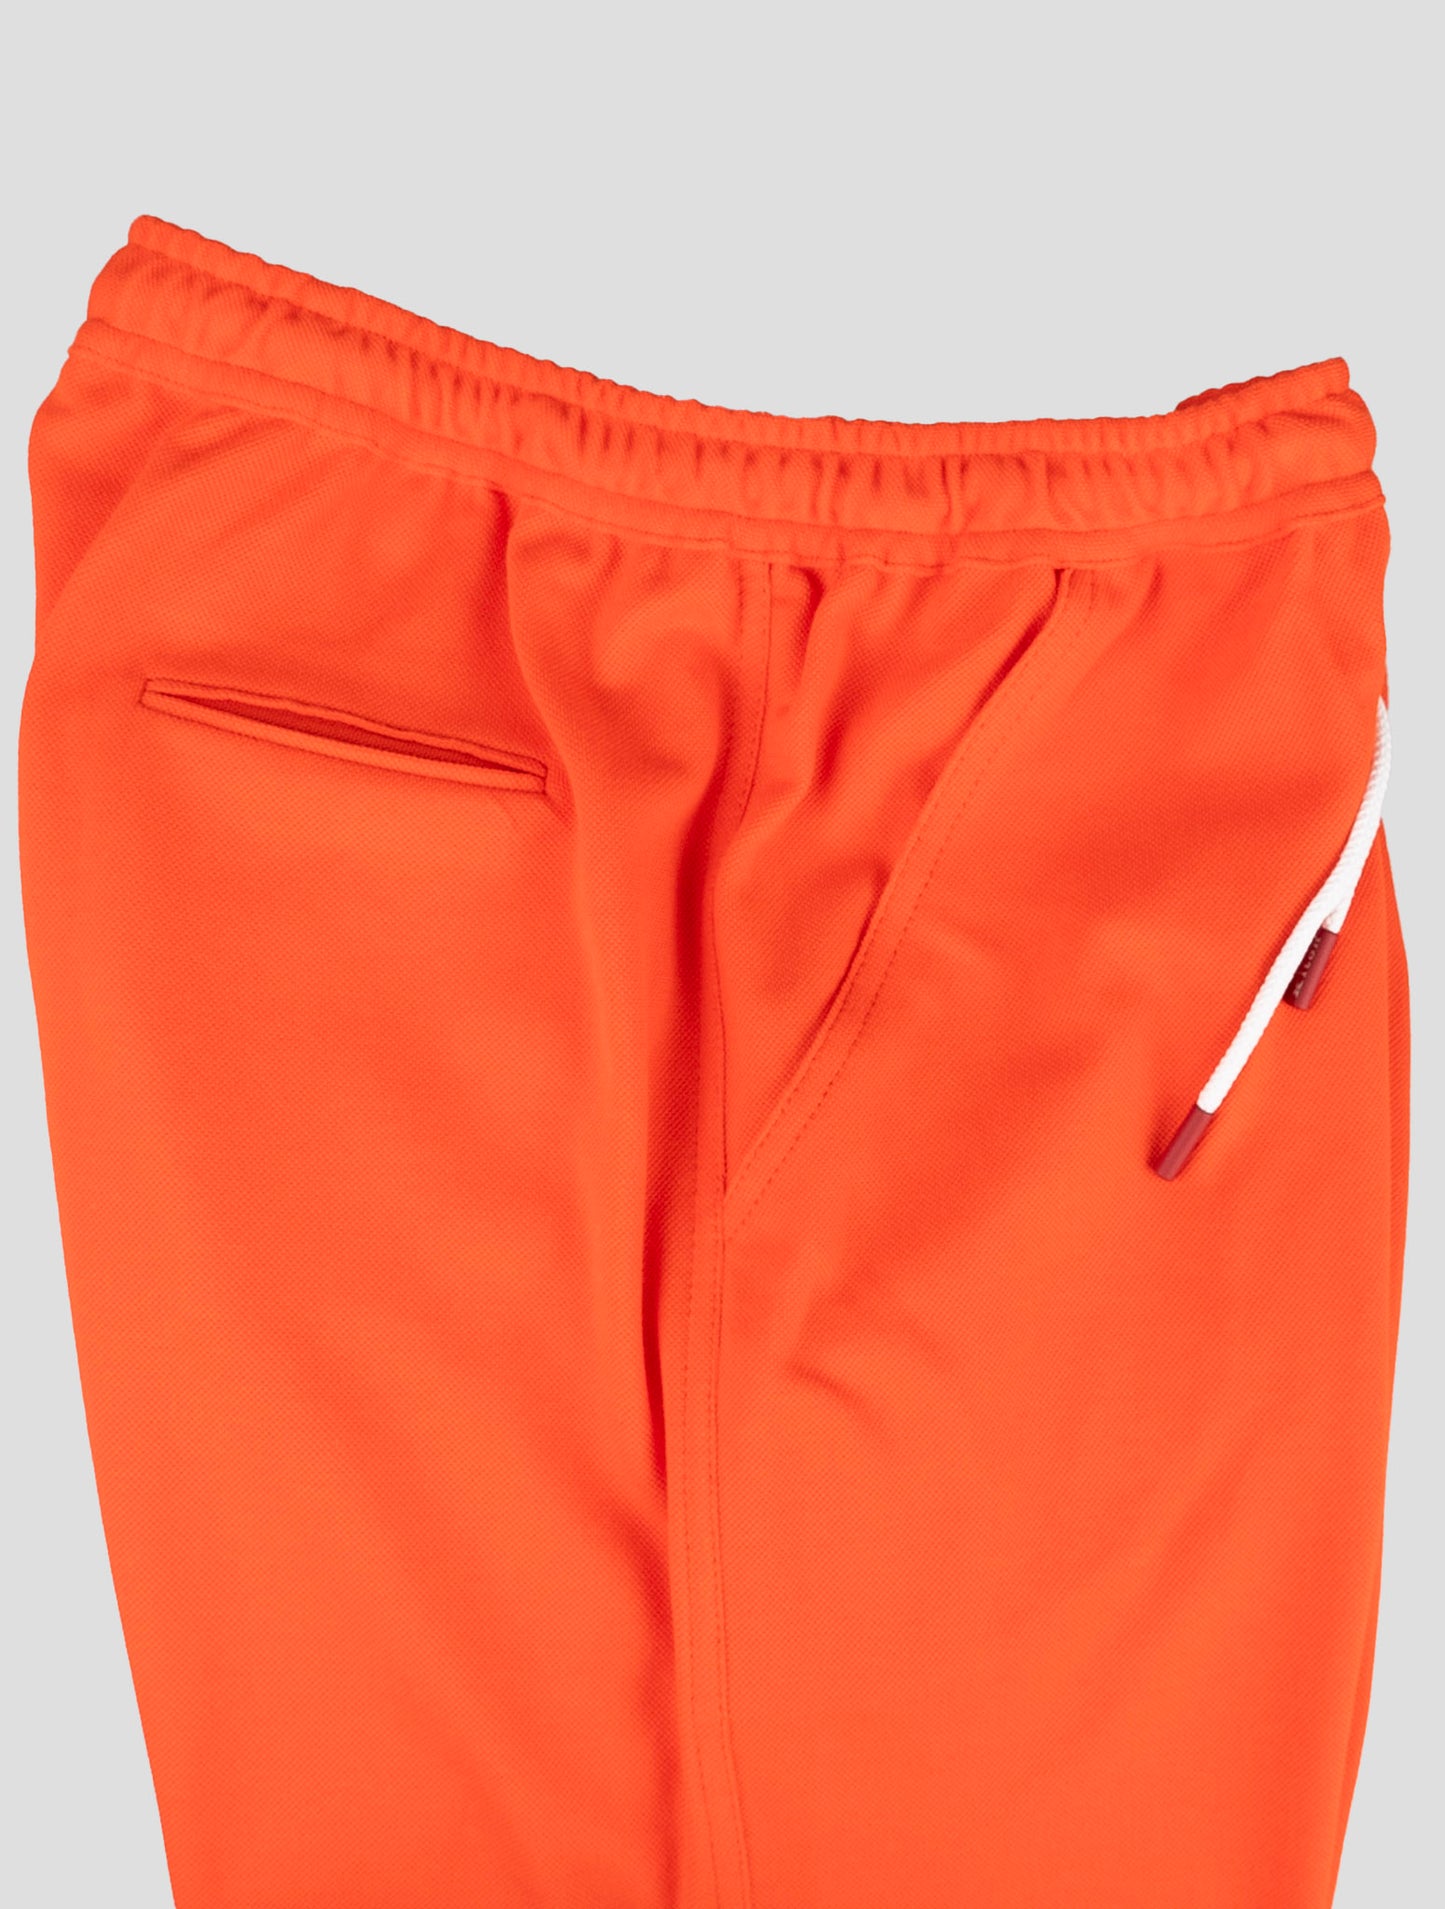 Kiton Matching Outfit-Blaue Mariano und Orange kurze Hosen Trainings anzug